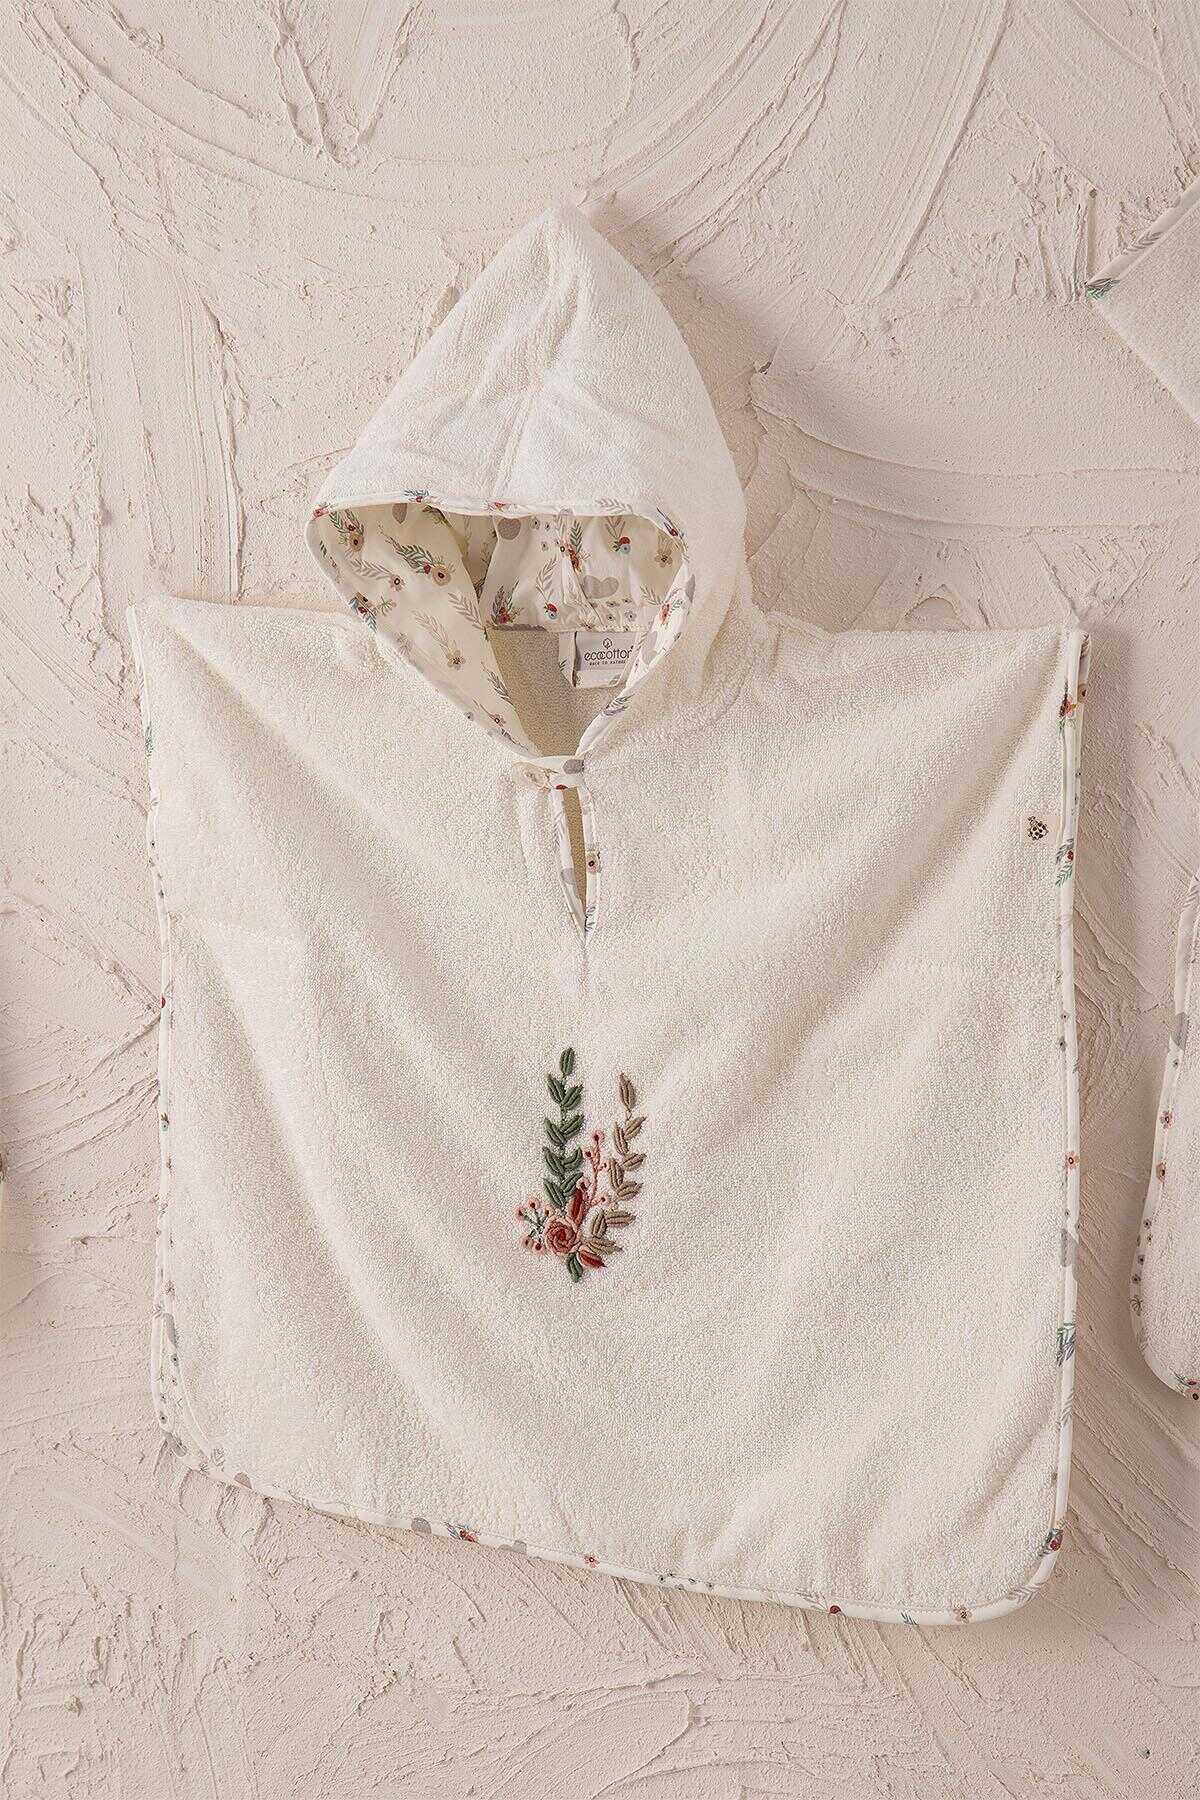 Ecocotton Lora Organic Cotton Embroidered Baby Poncho Set